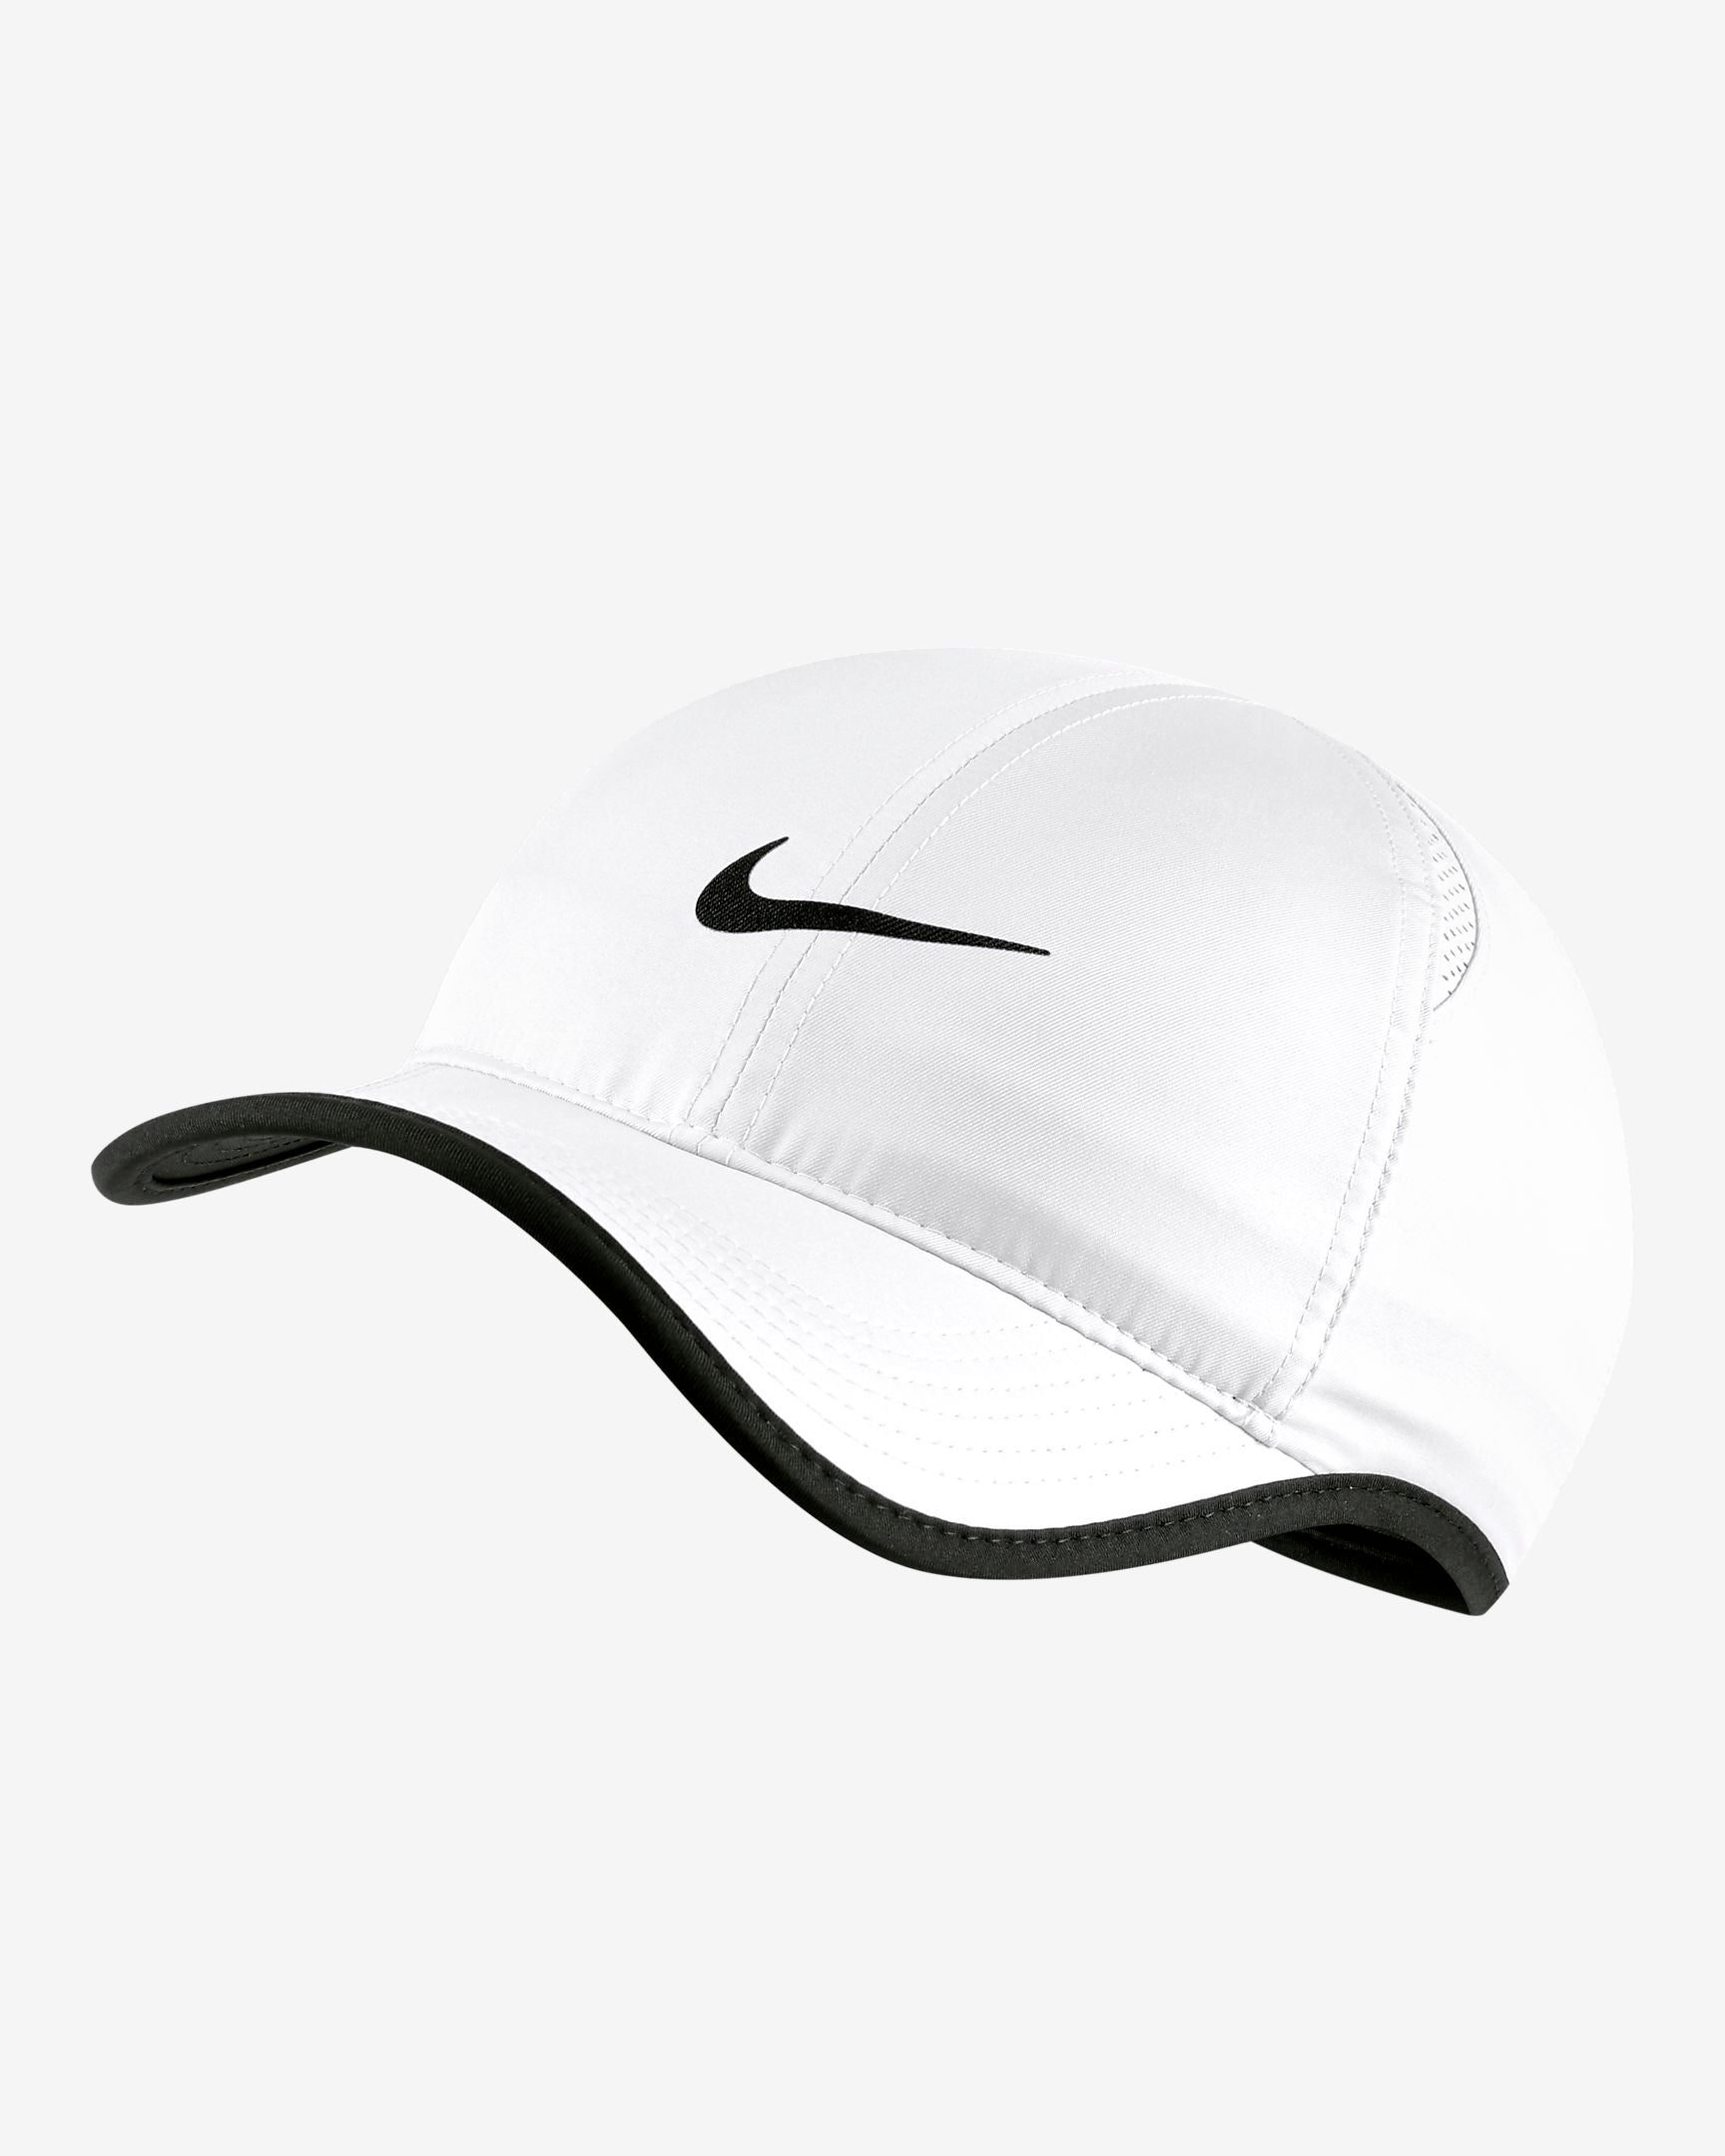 Nike Sportswear AeroBill Featherlight (One Size) – MASTERS RACKET